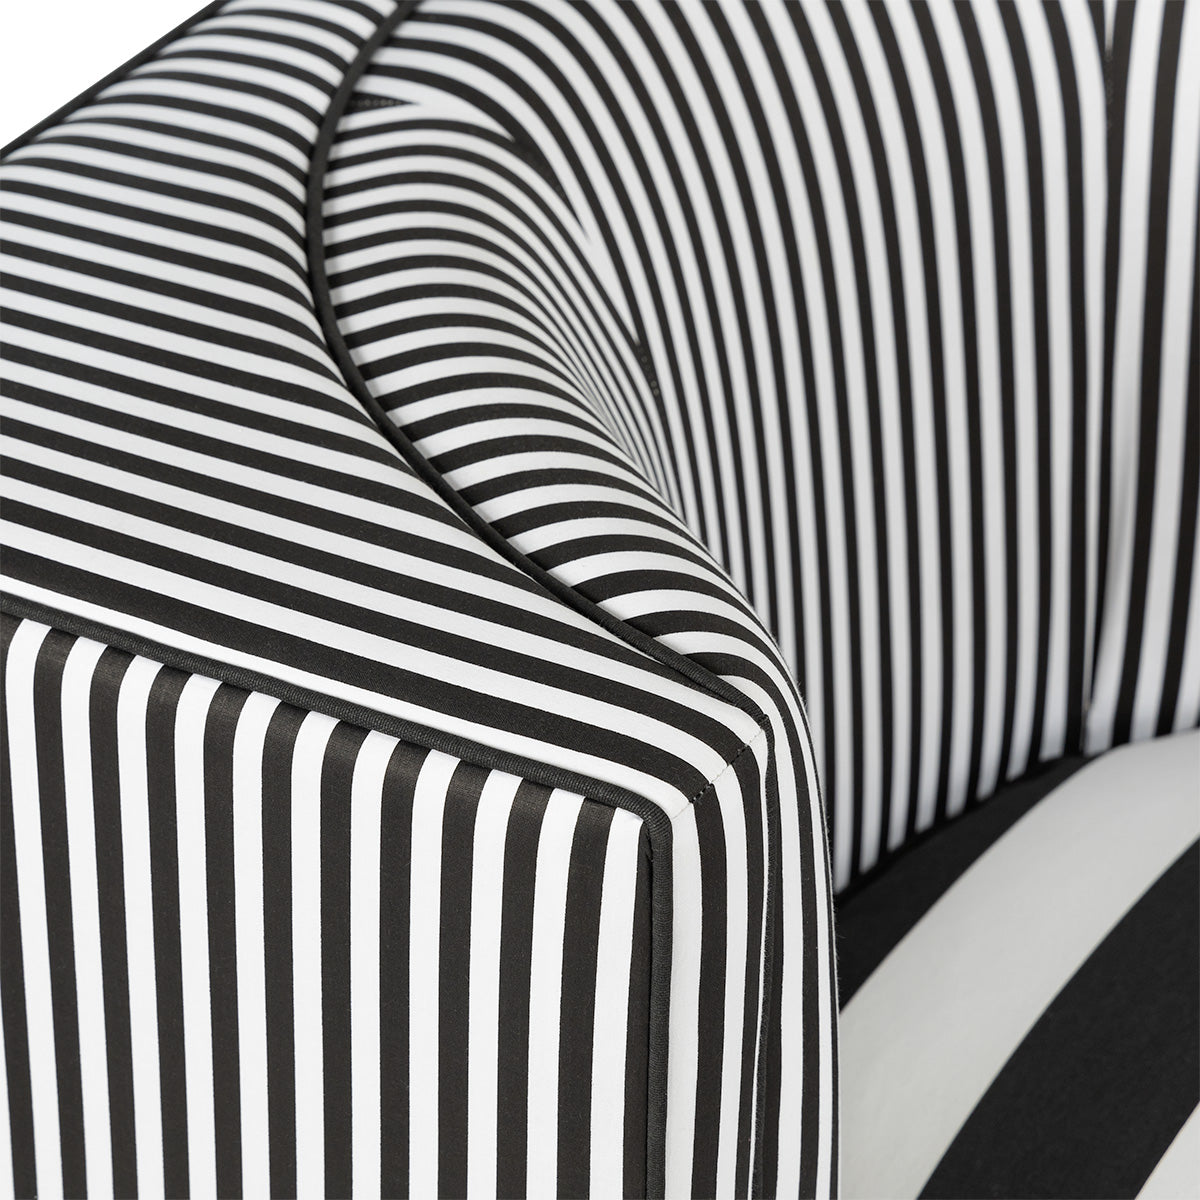 Goldfinger Sofa in Black and White Stripes